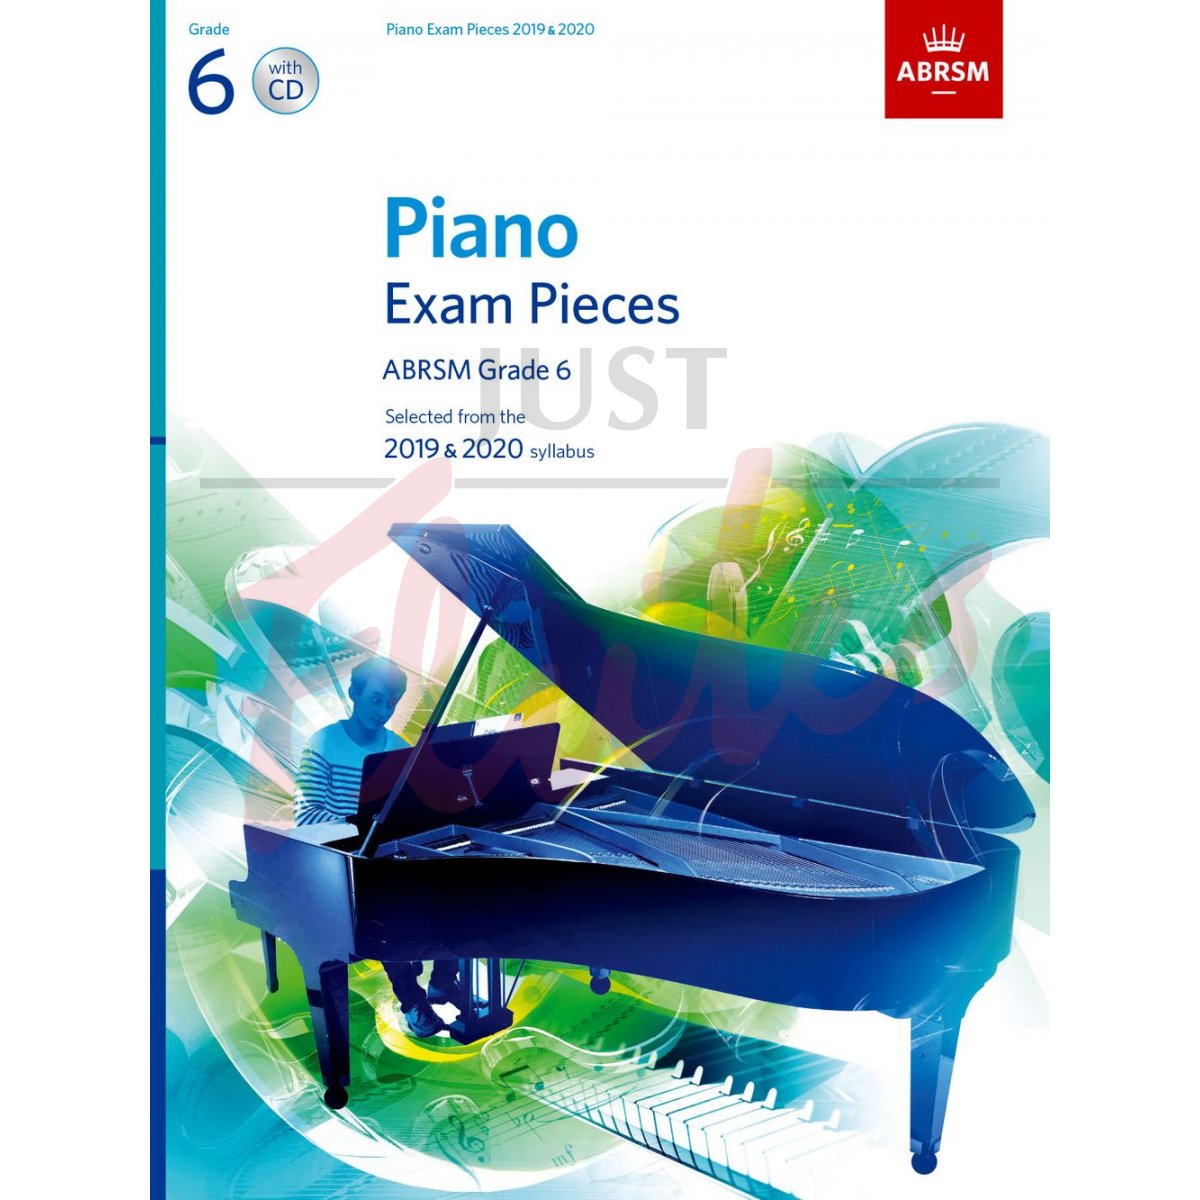 Piano Exam Pieces 2019-2020, Grade 6